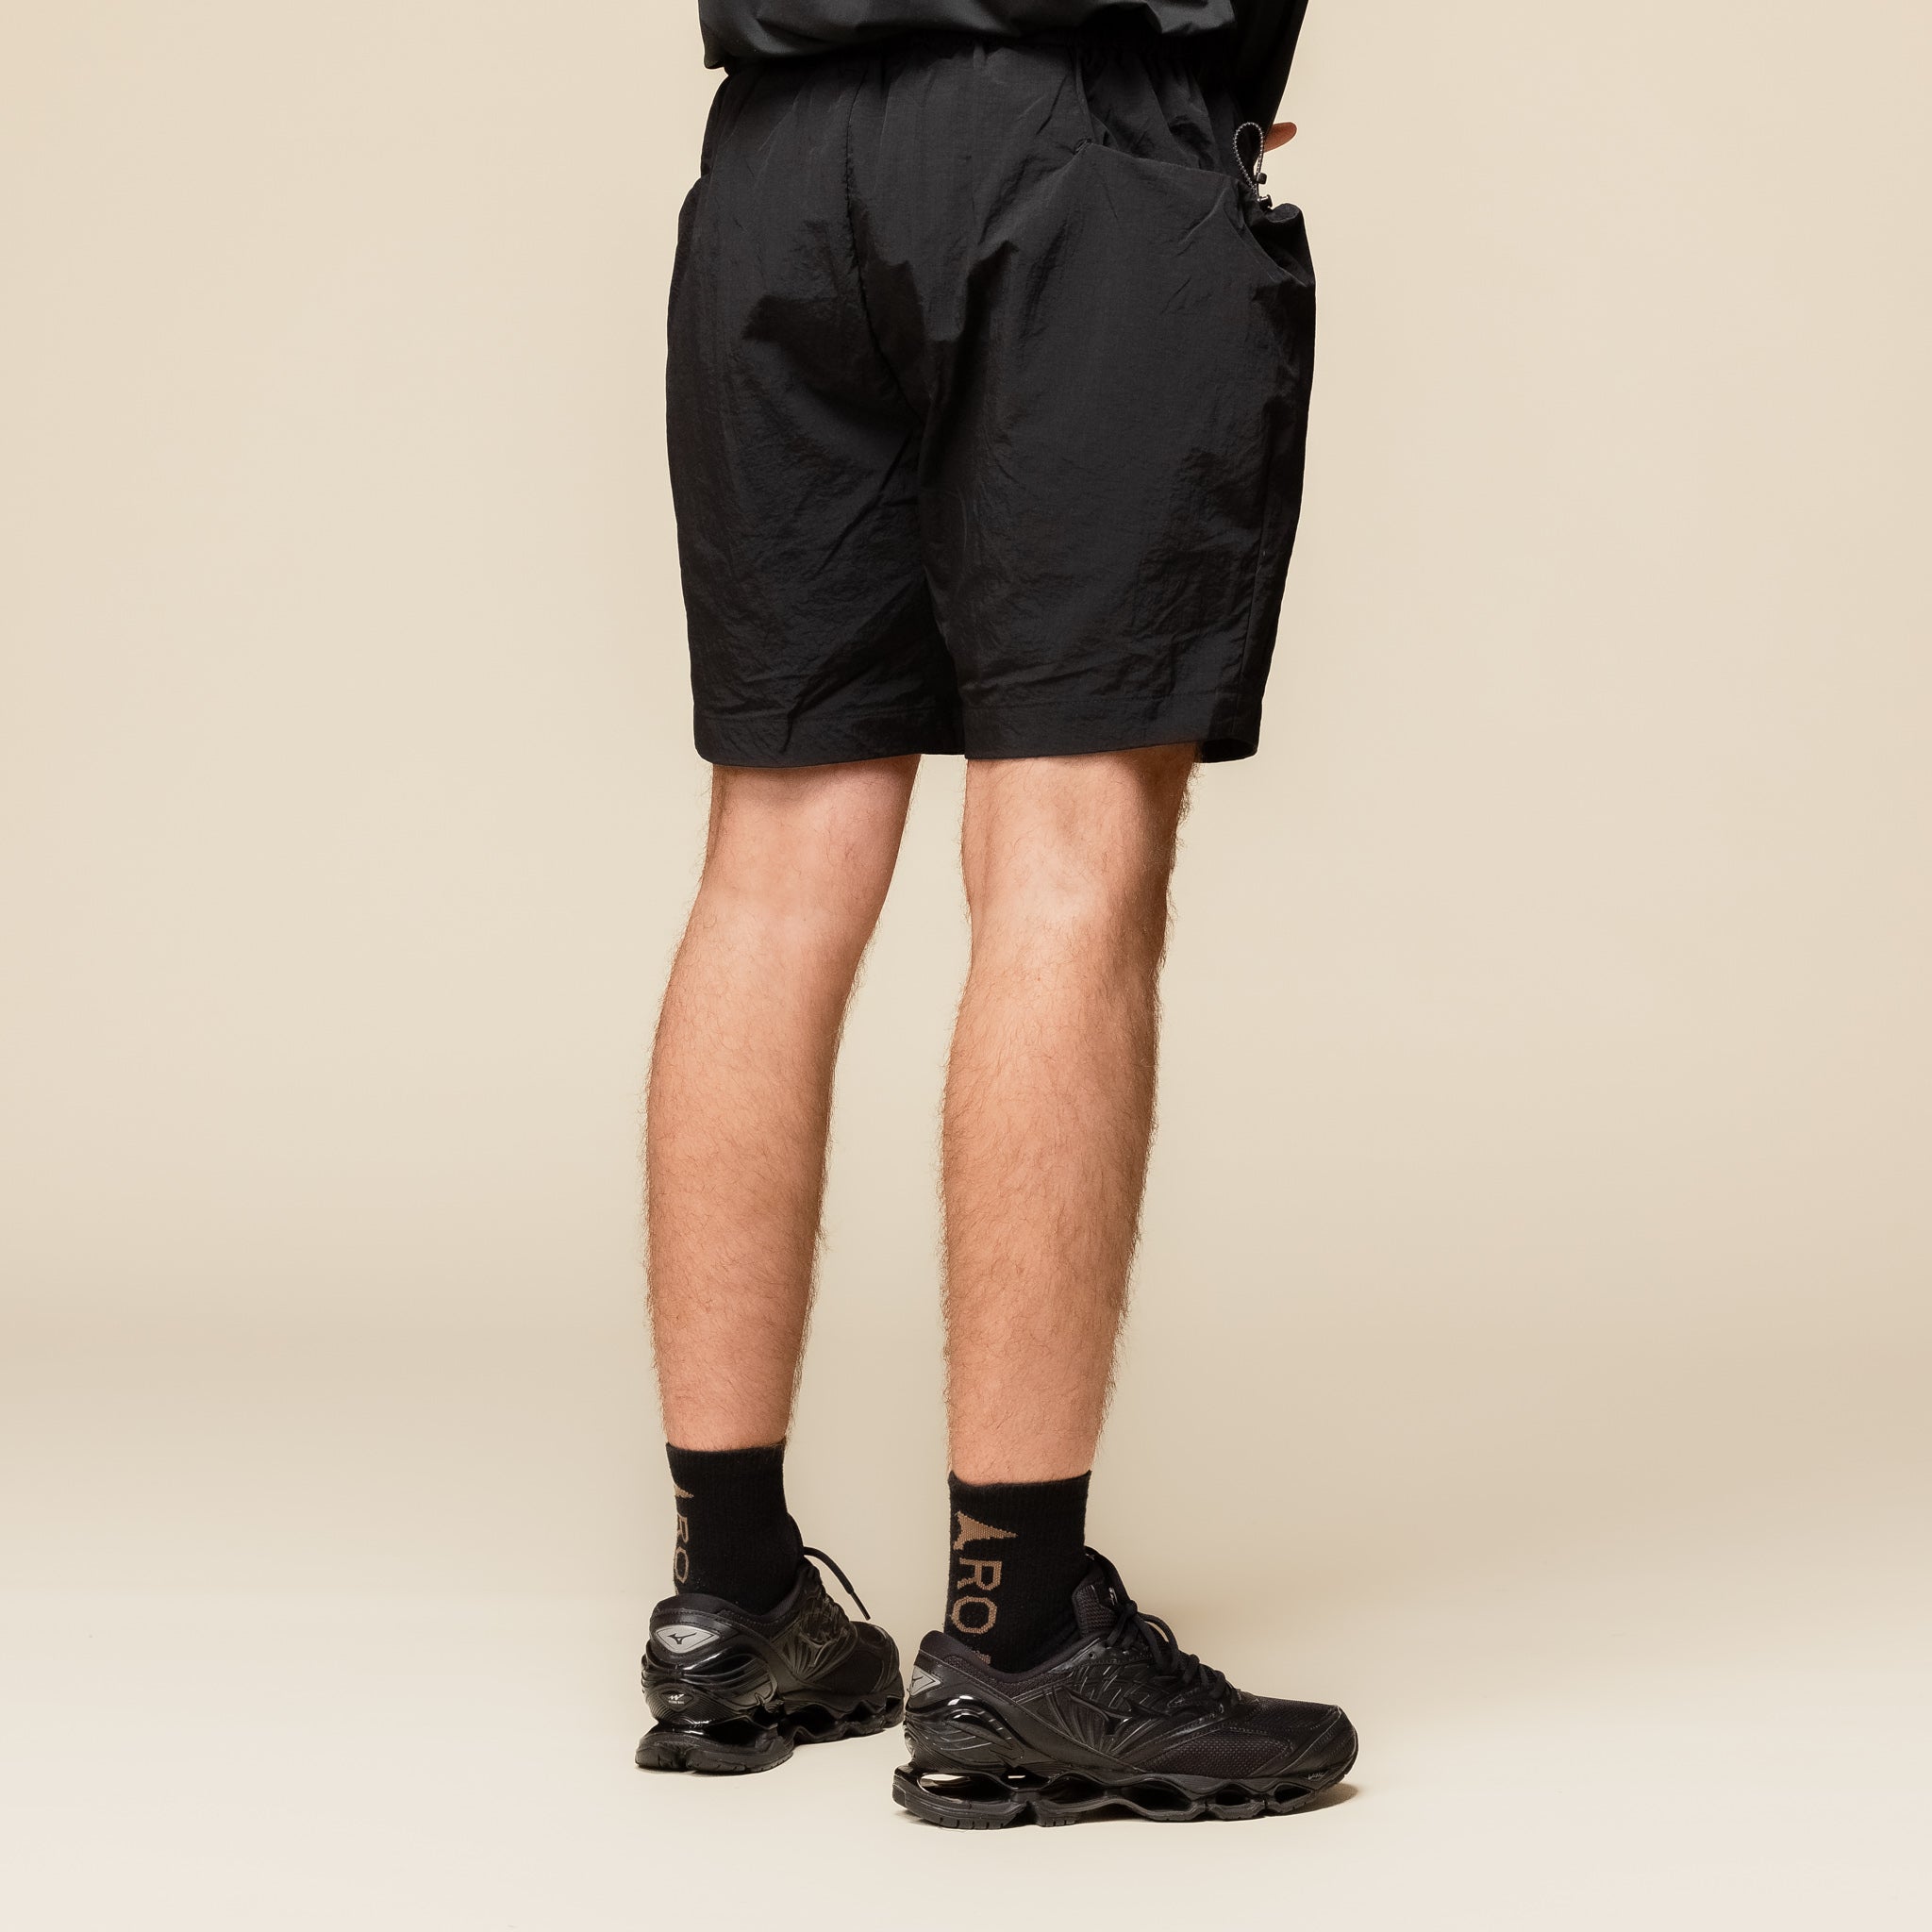 CMF Outdoor Garment - Activity Shorts - Black